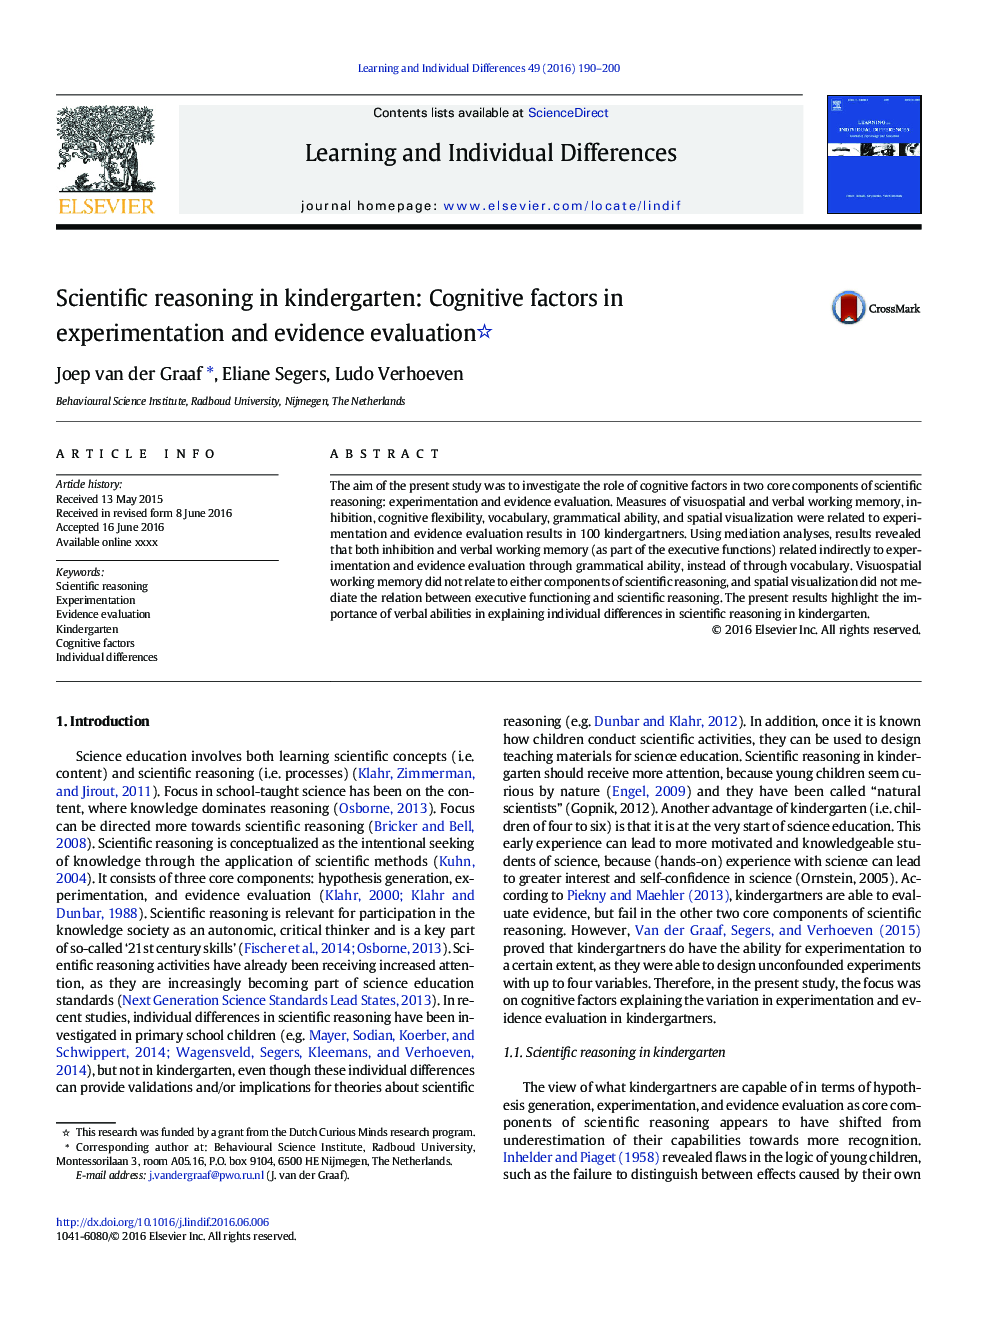 Scientific reasoning in kindergarten: Cognitive factors in experimentation and evidence evaluation